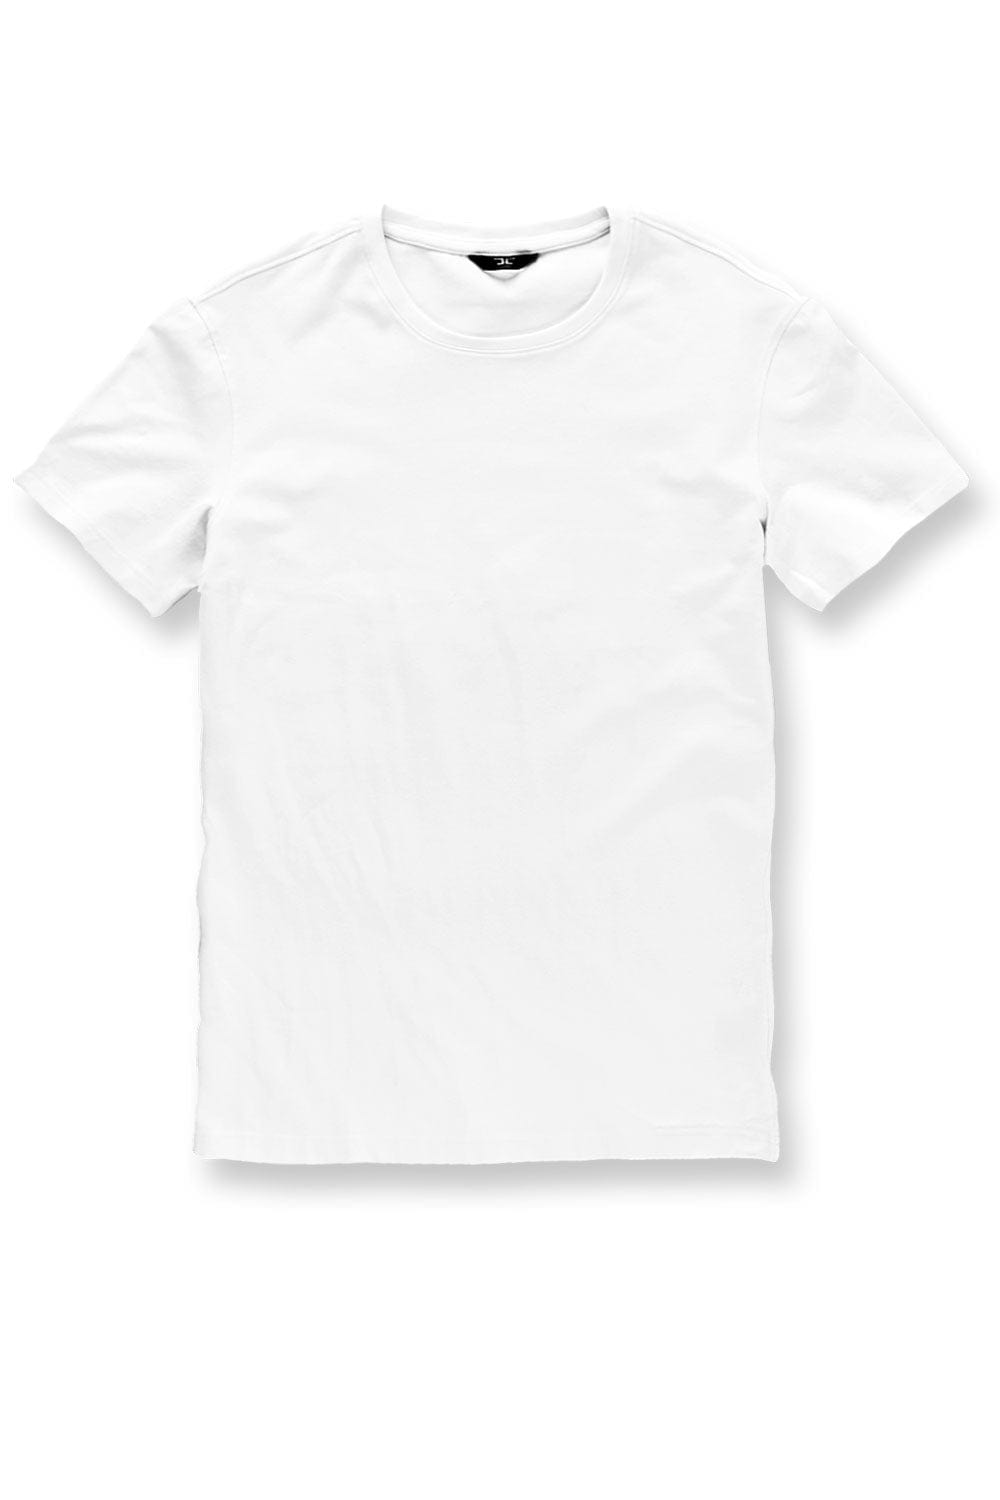 Jordan Craig Premium Crewneck T-Shirt White / S